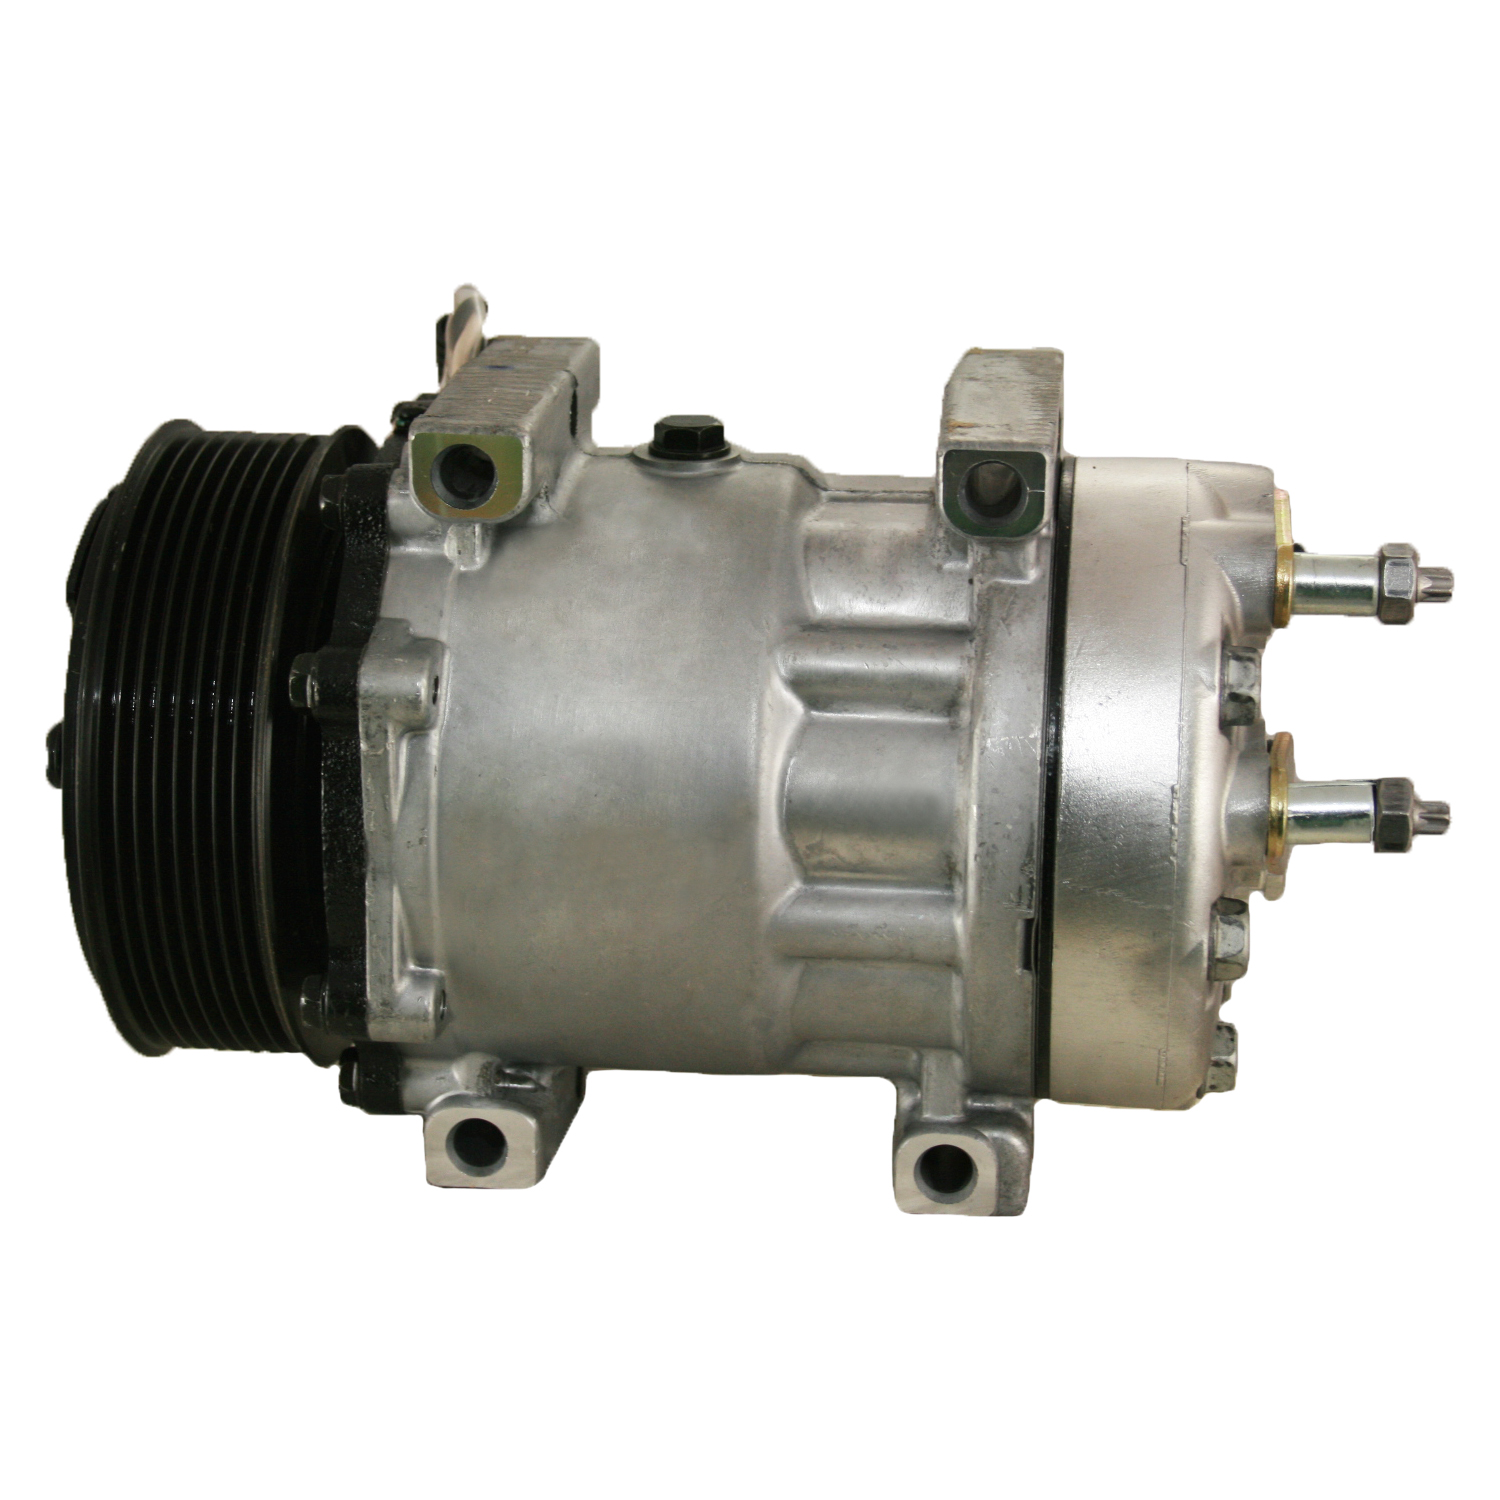 TCW Compressor 40598.801NEW New Product Image field_60b6a13a6e67c